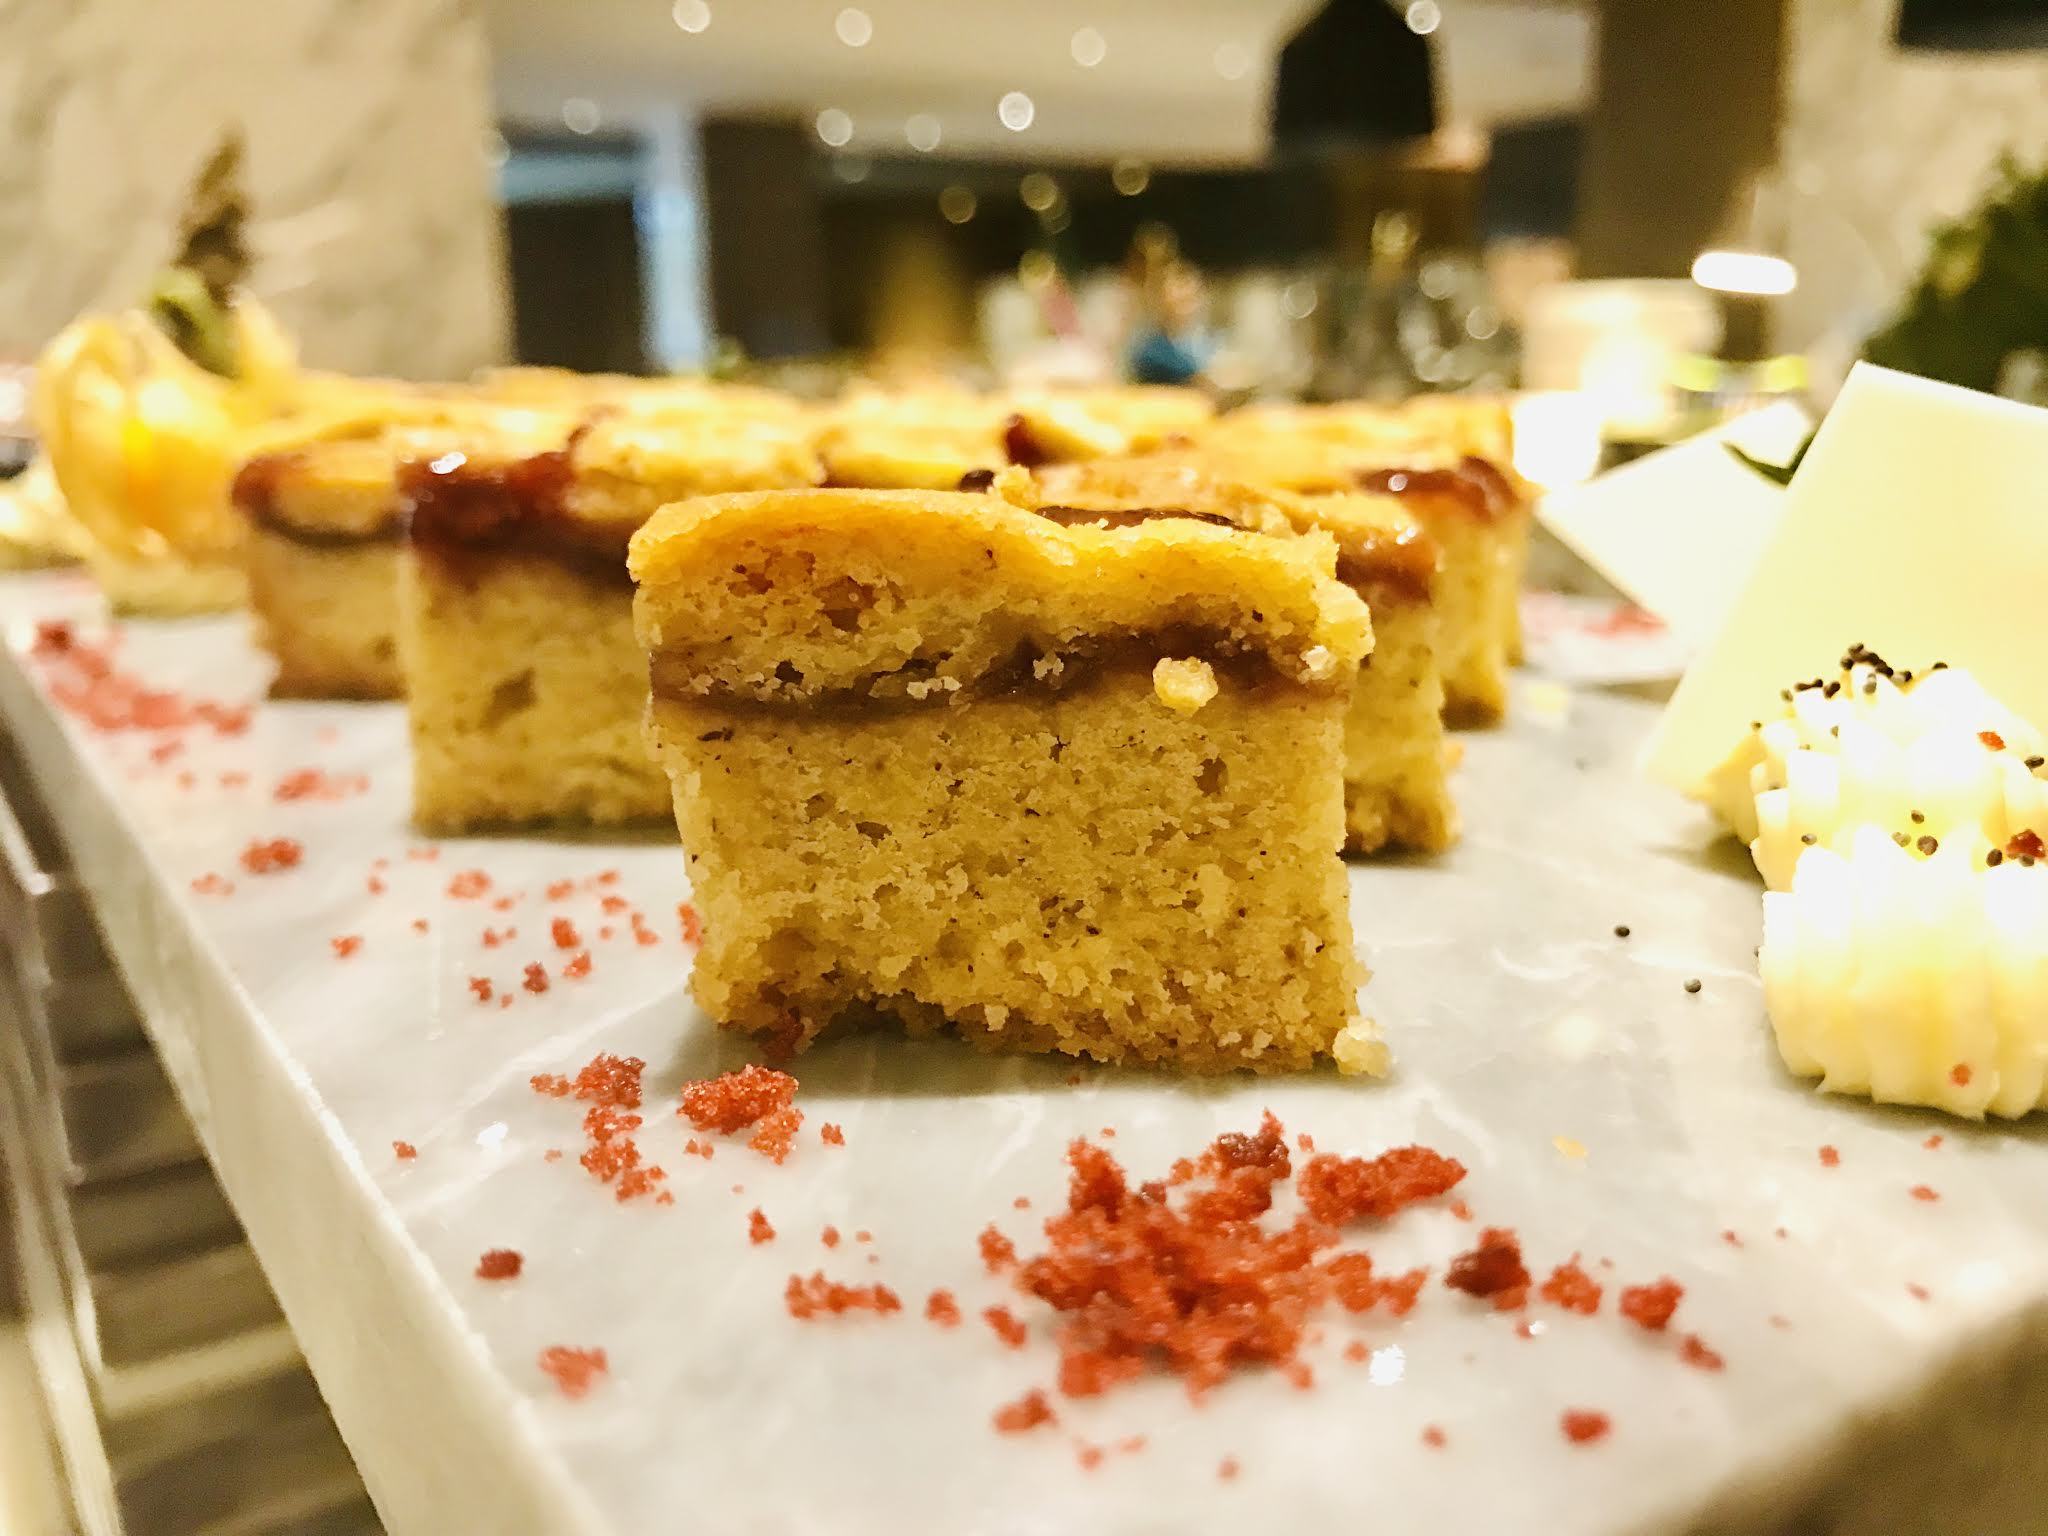 Jom Makan 'Balik Kampung' at Hilton Hotels Kota Kinabalu